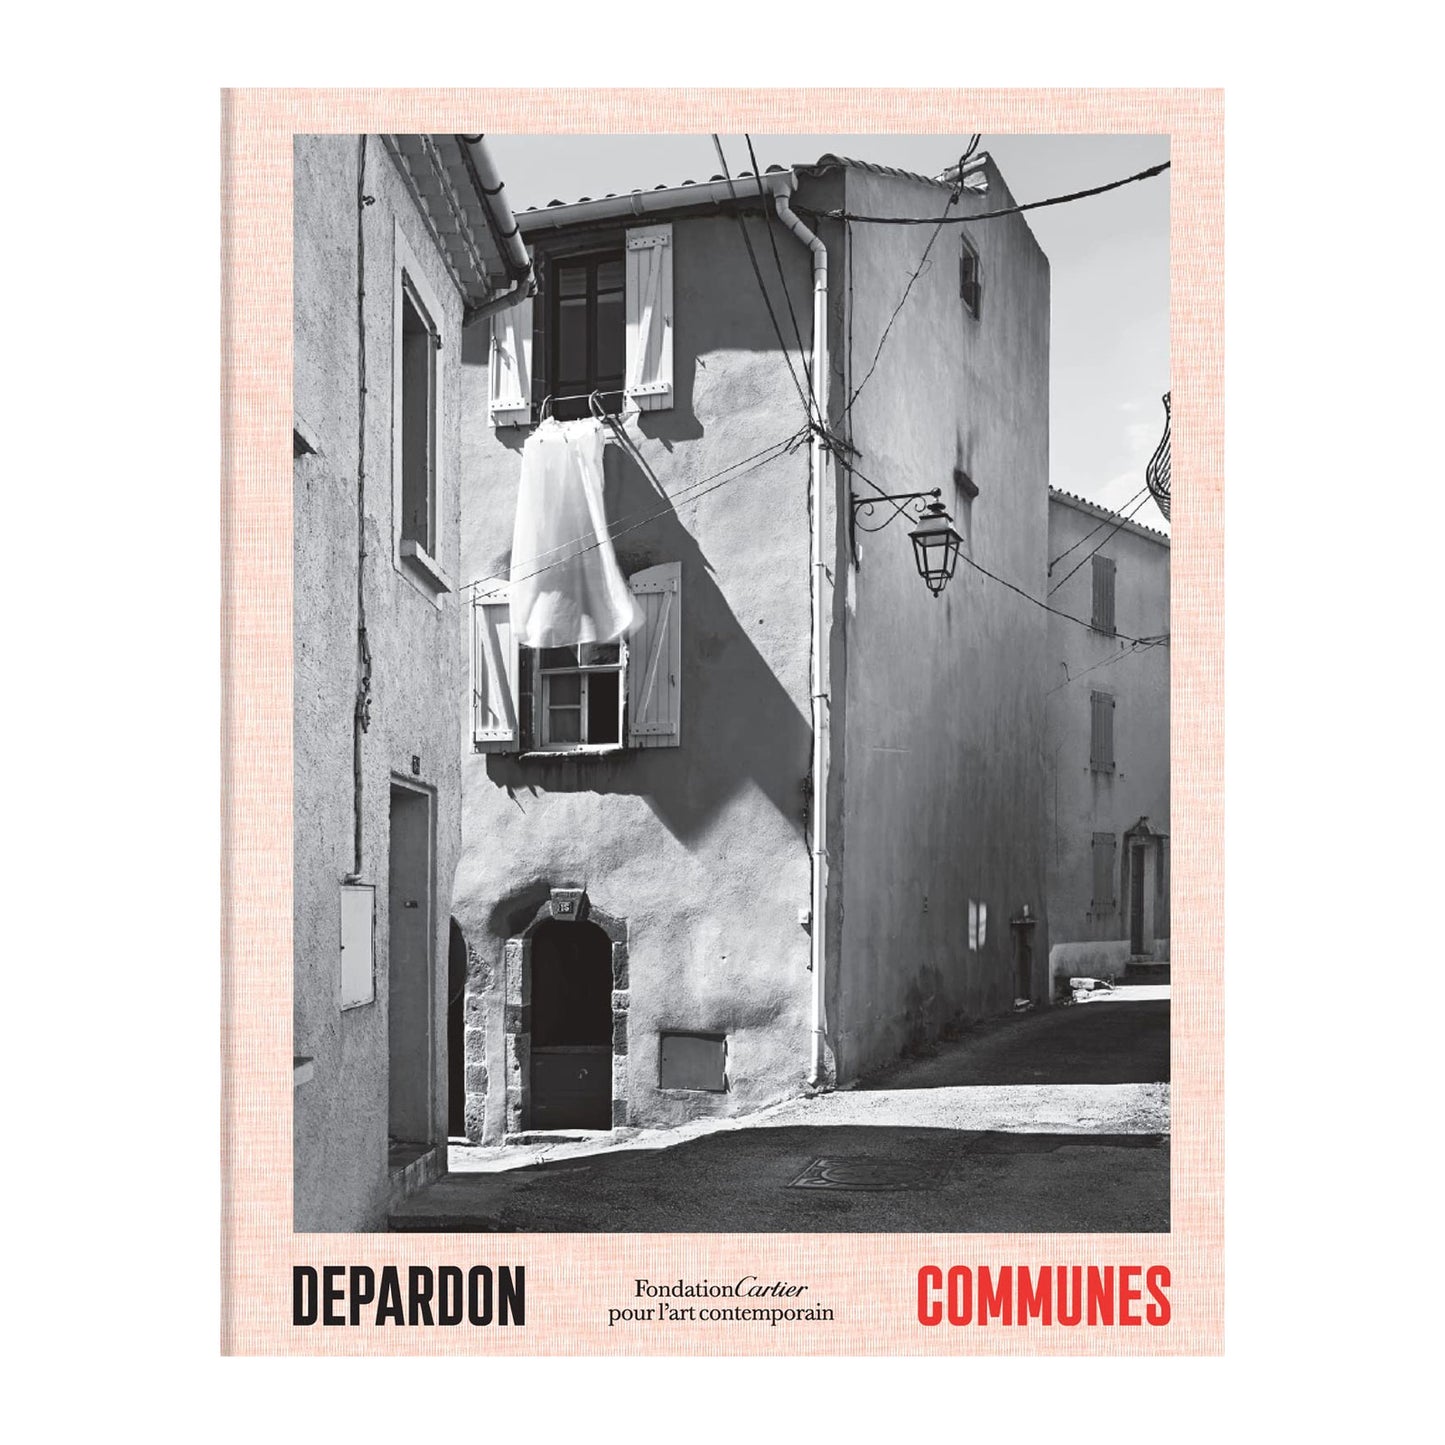 Raymond Depardon: Communes